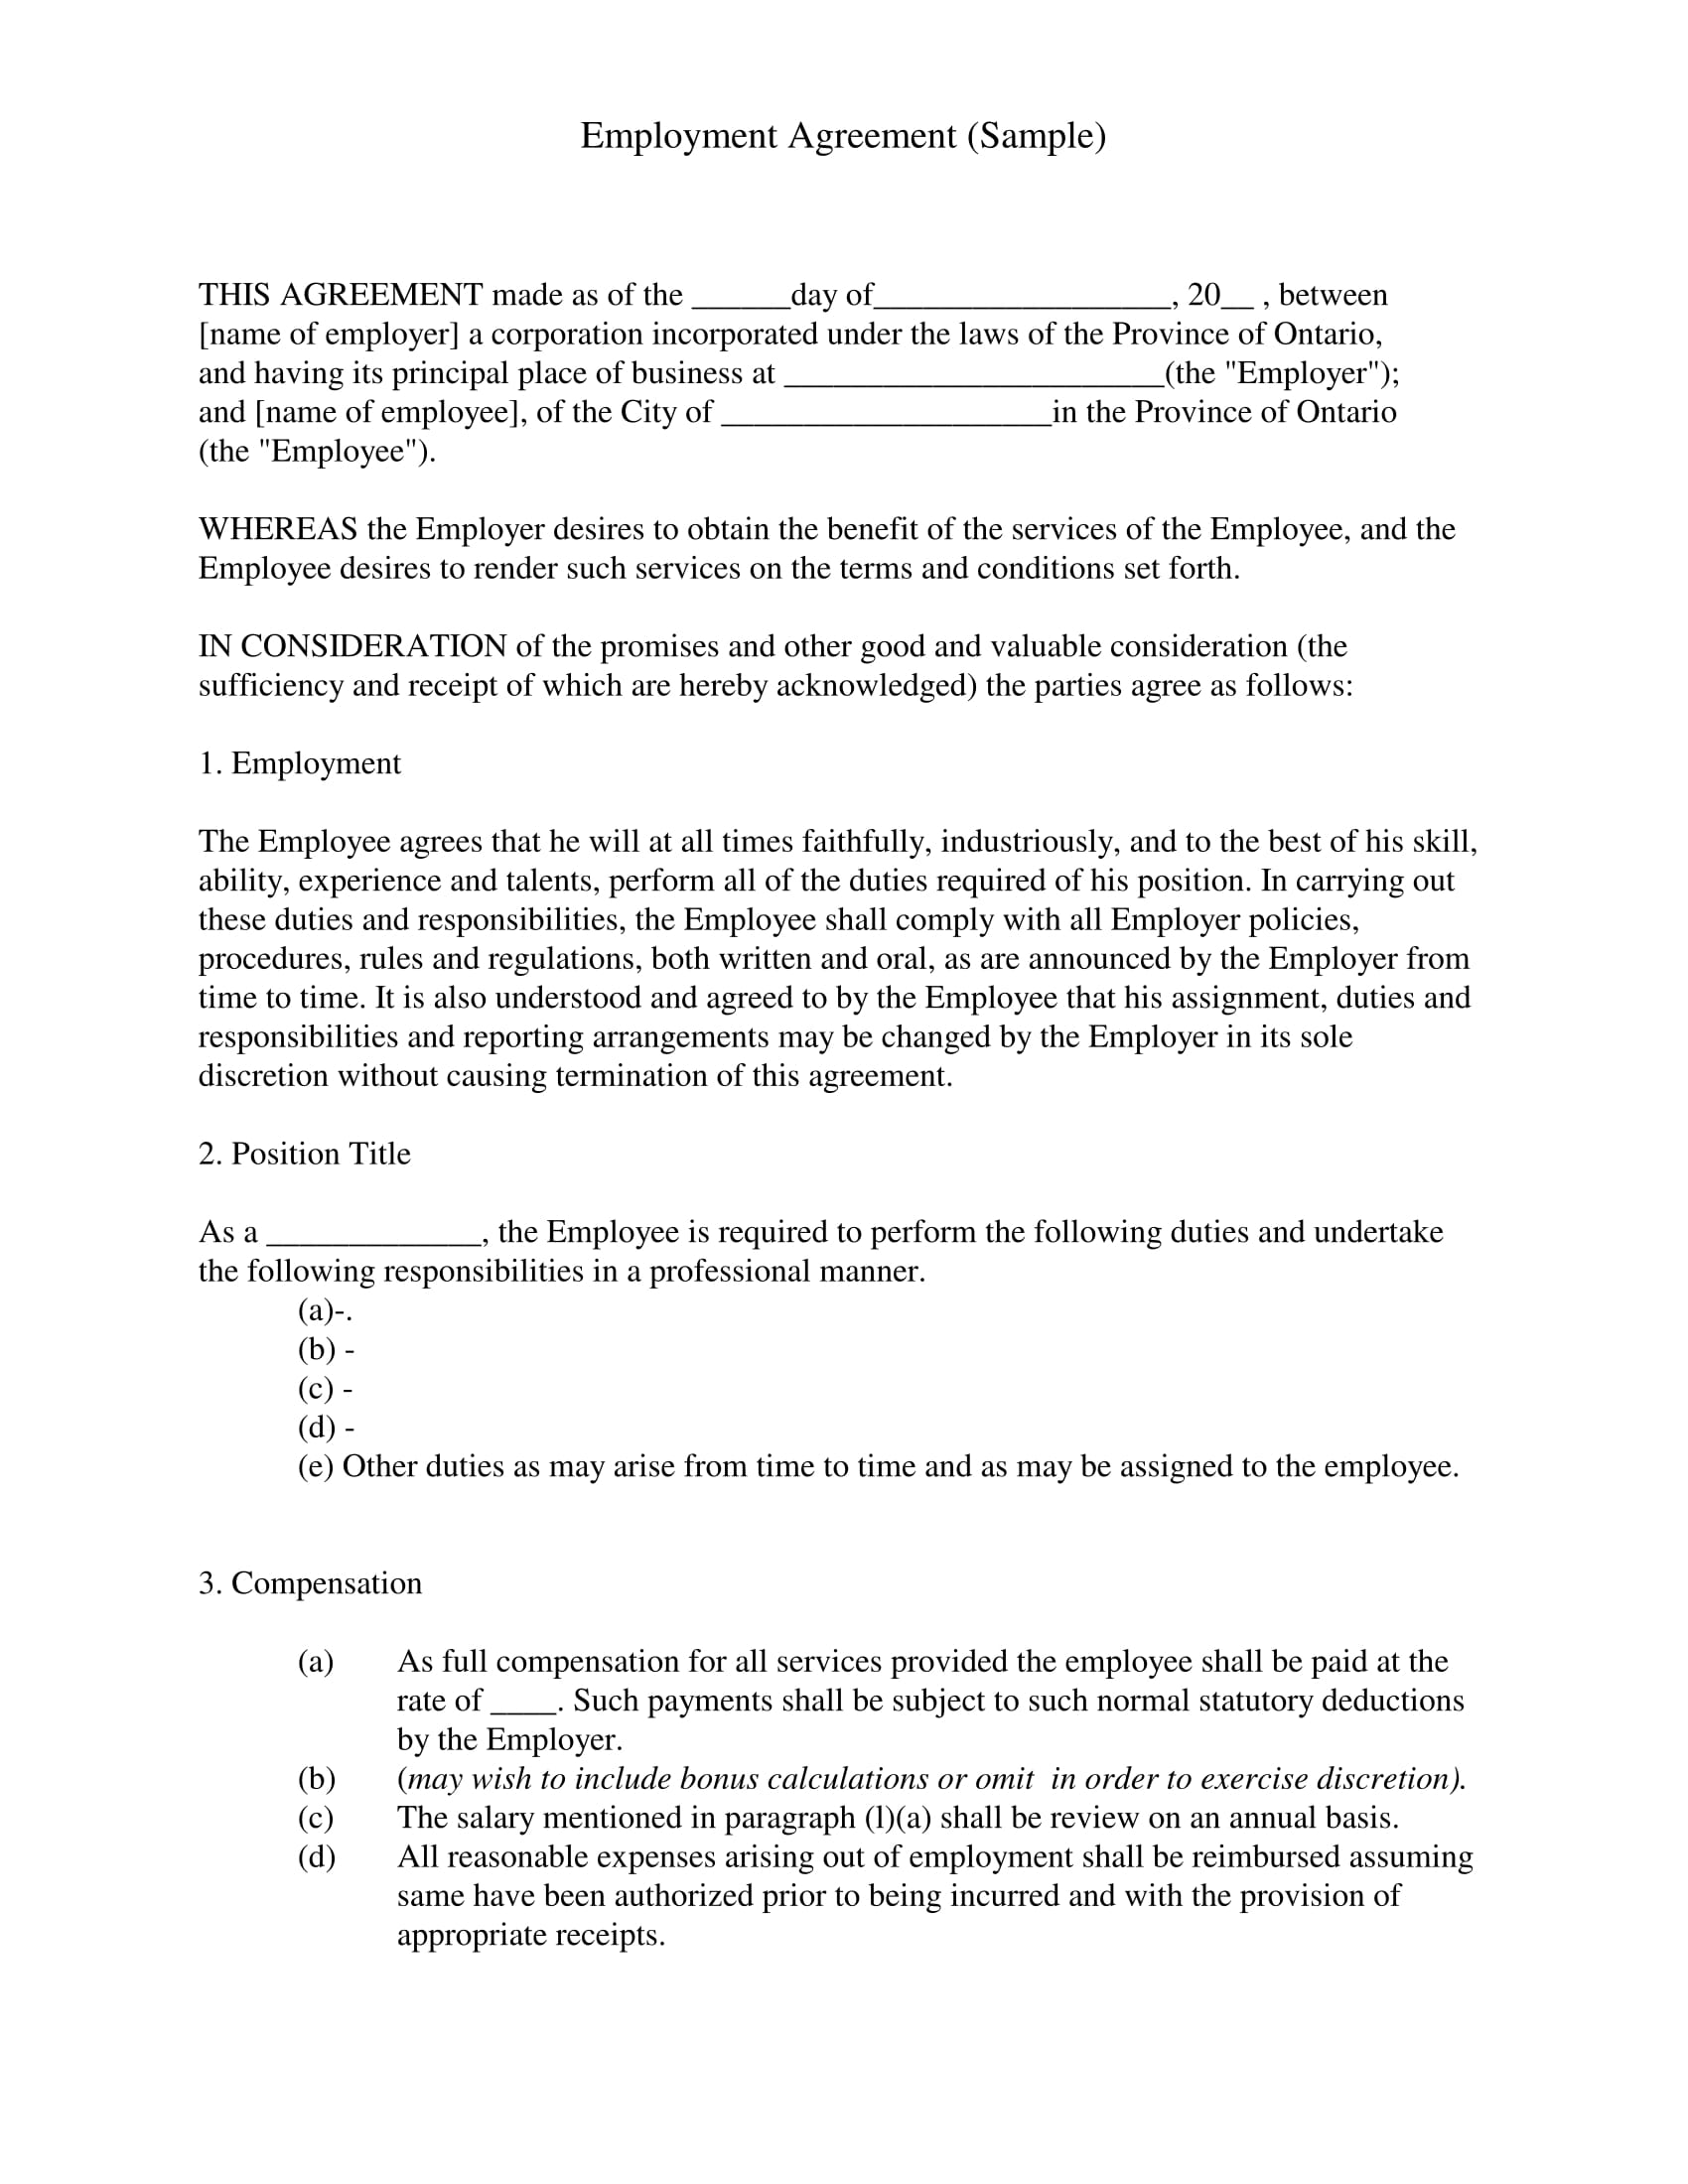 employment agreement form sample 1